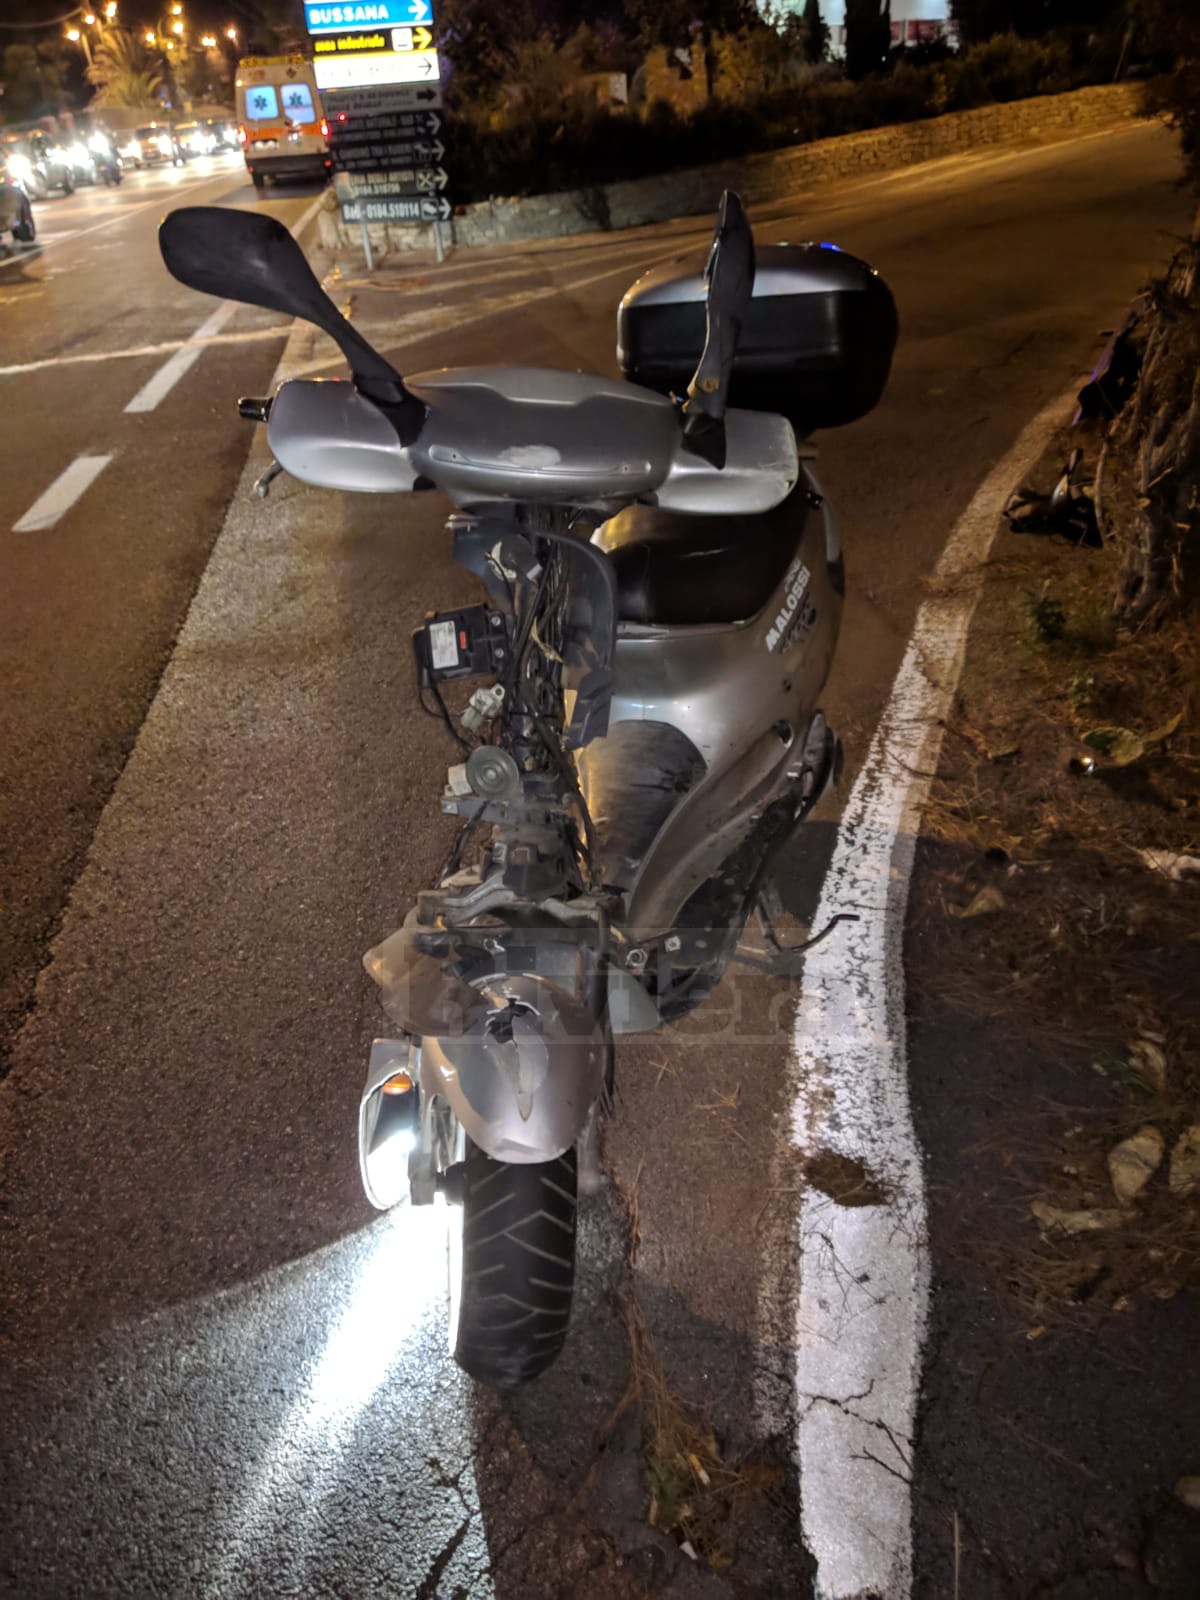 1 Incidente Bussana scooter Camper albanese Sanremo_04